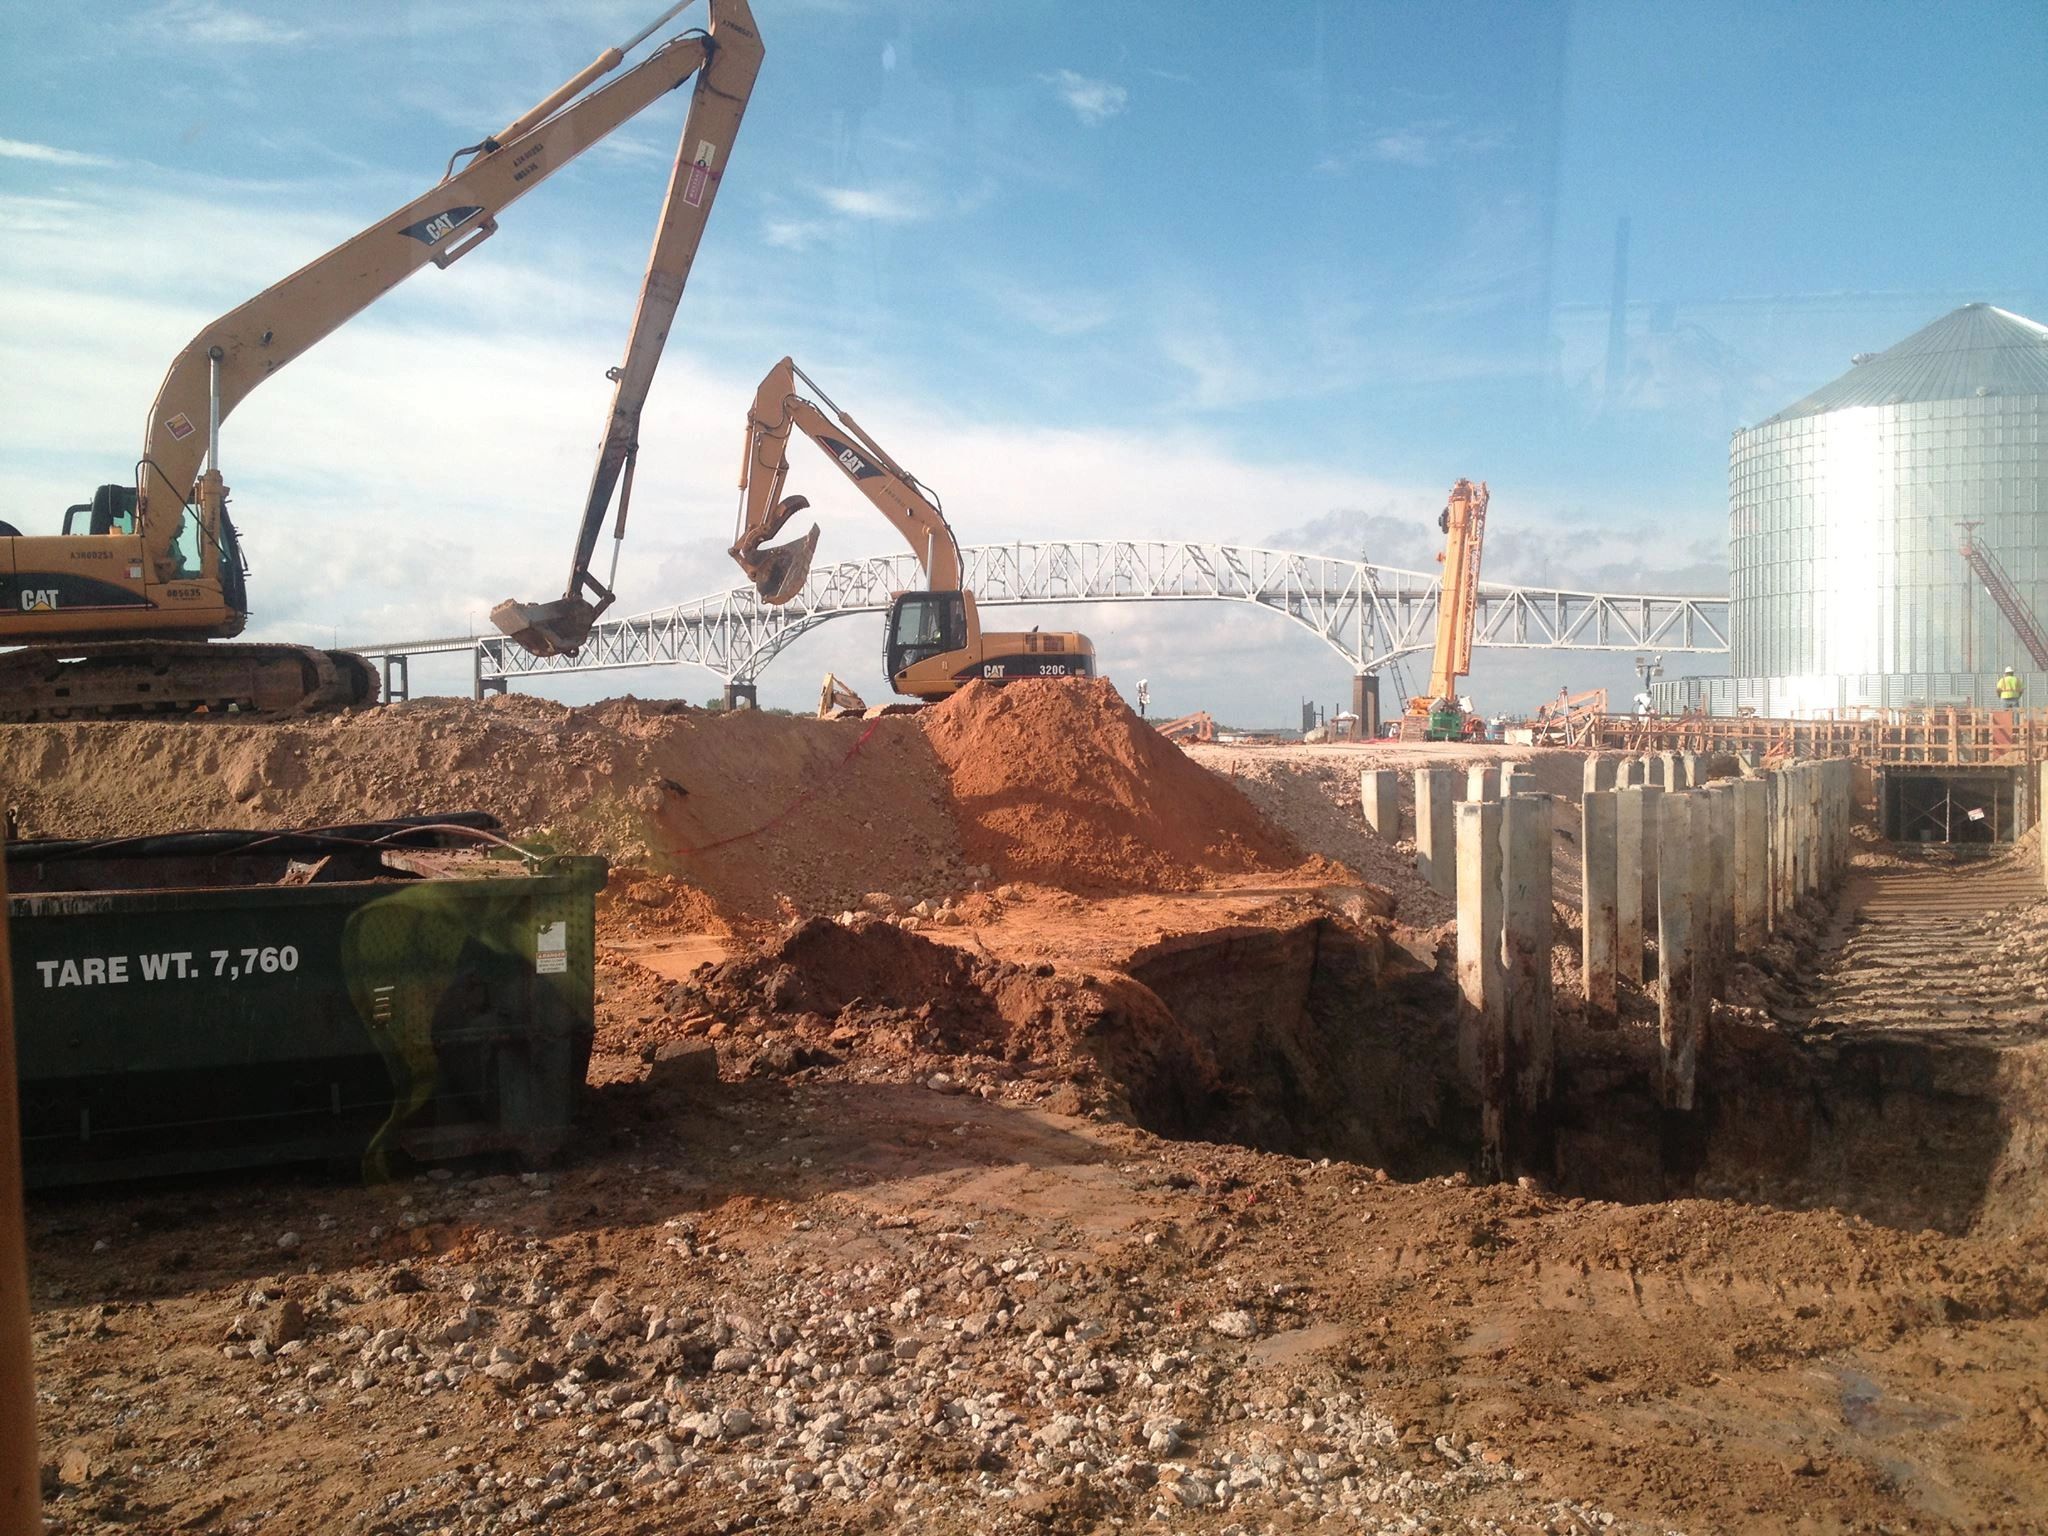 CLAYBAR CONSTRUCTION - Orange, Texas - Demolition Services - Phone Number -  Yelp